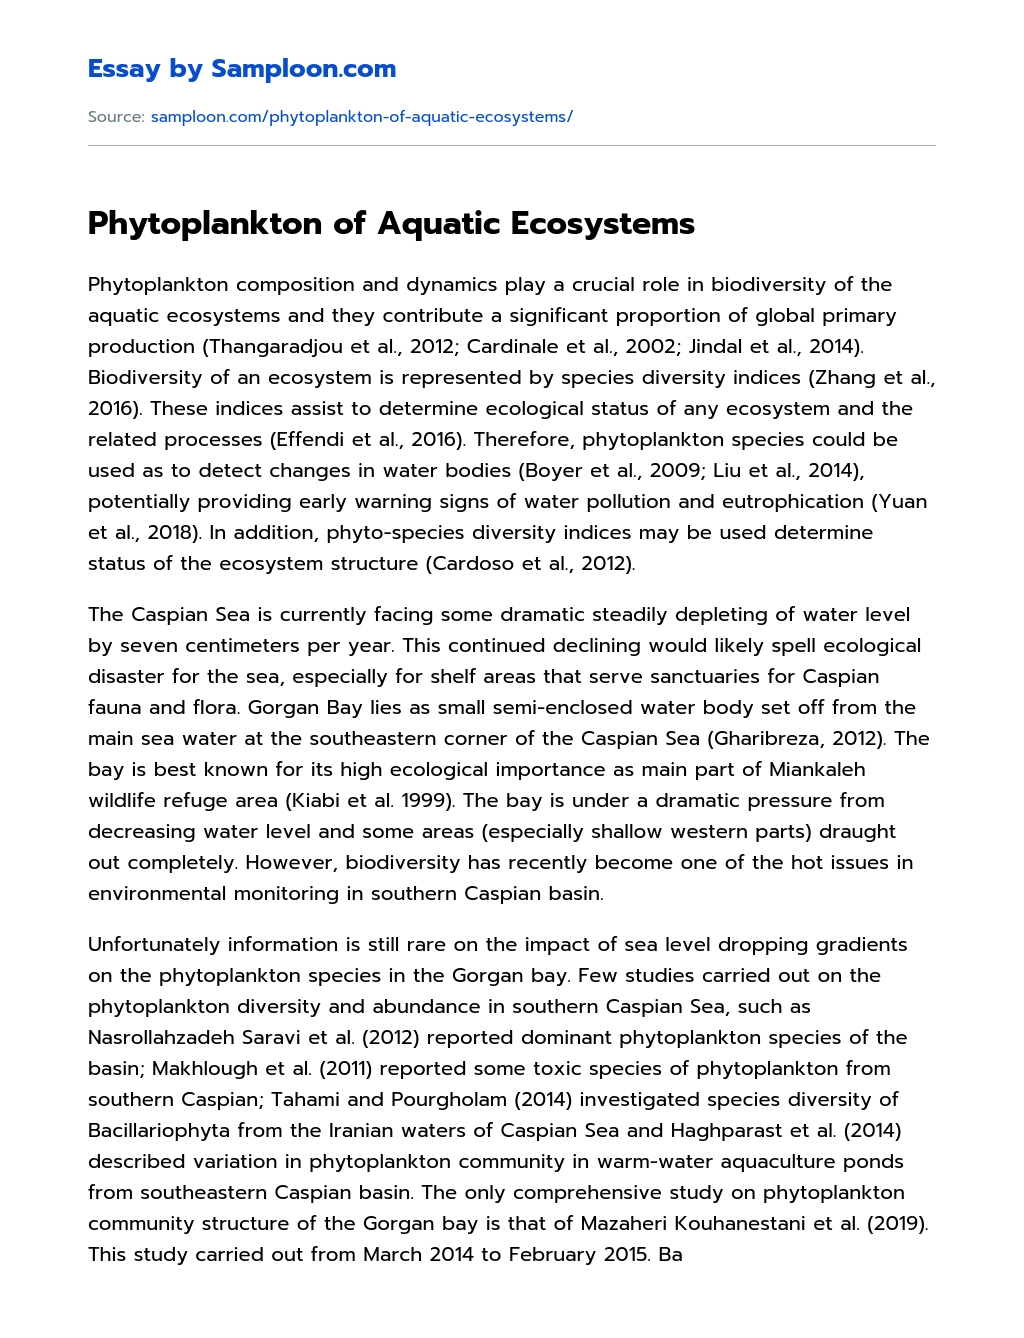 Phytoplankton of Aquatic Ecosystems essay